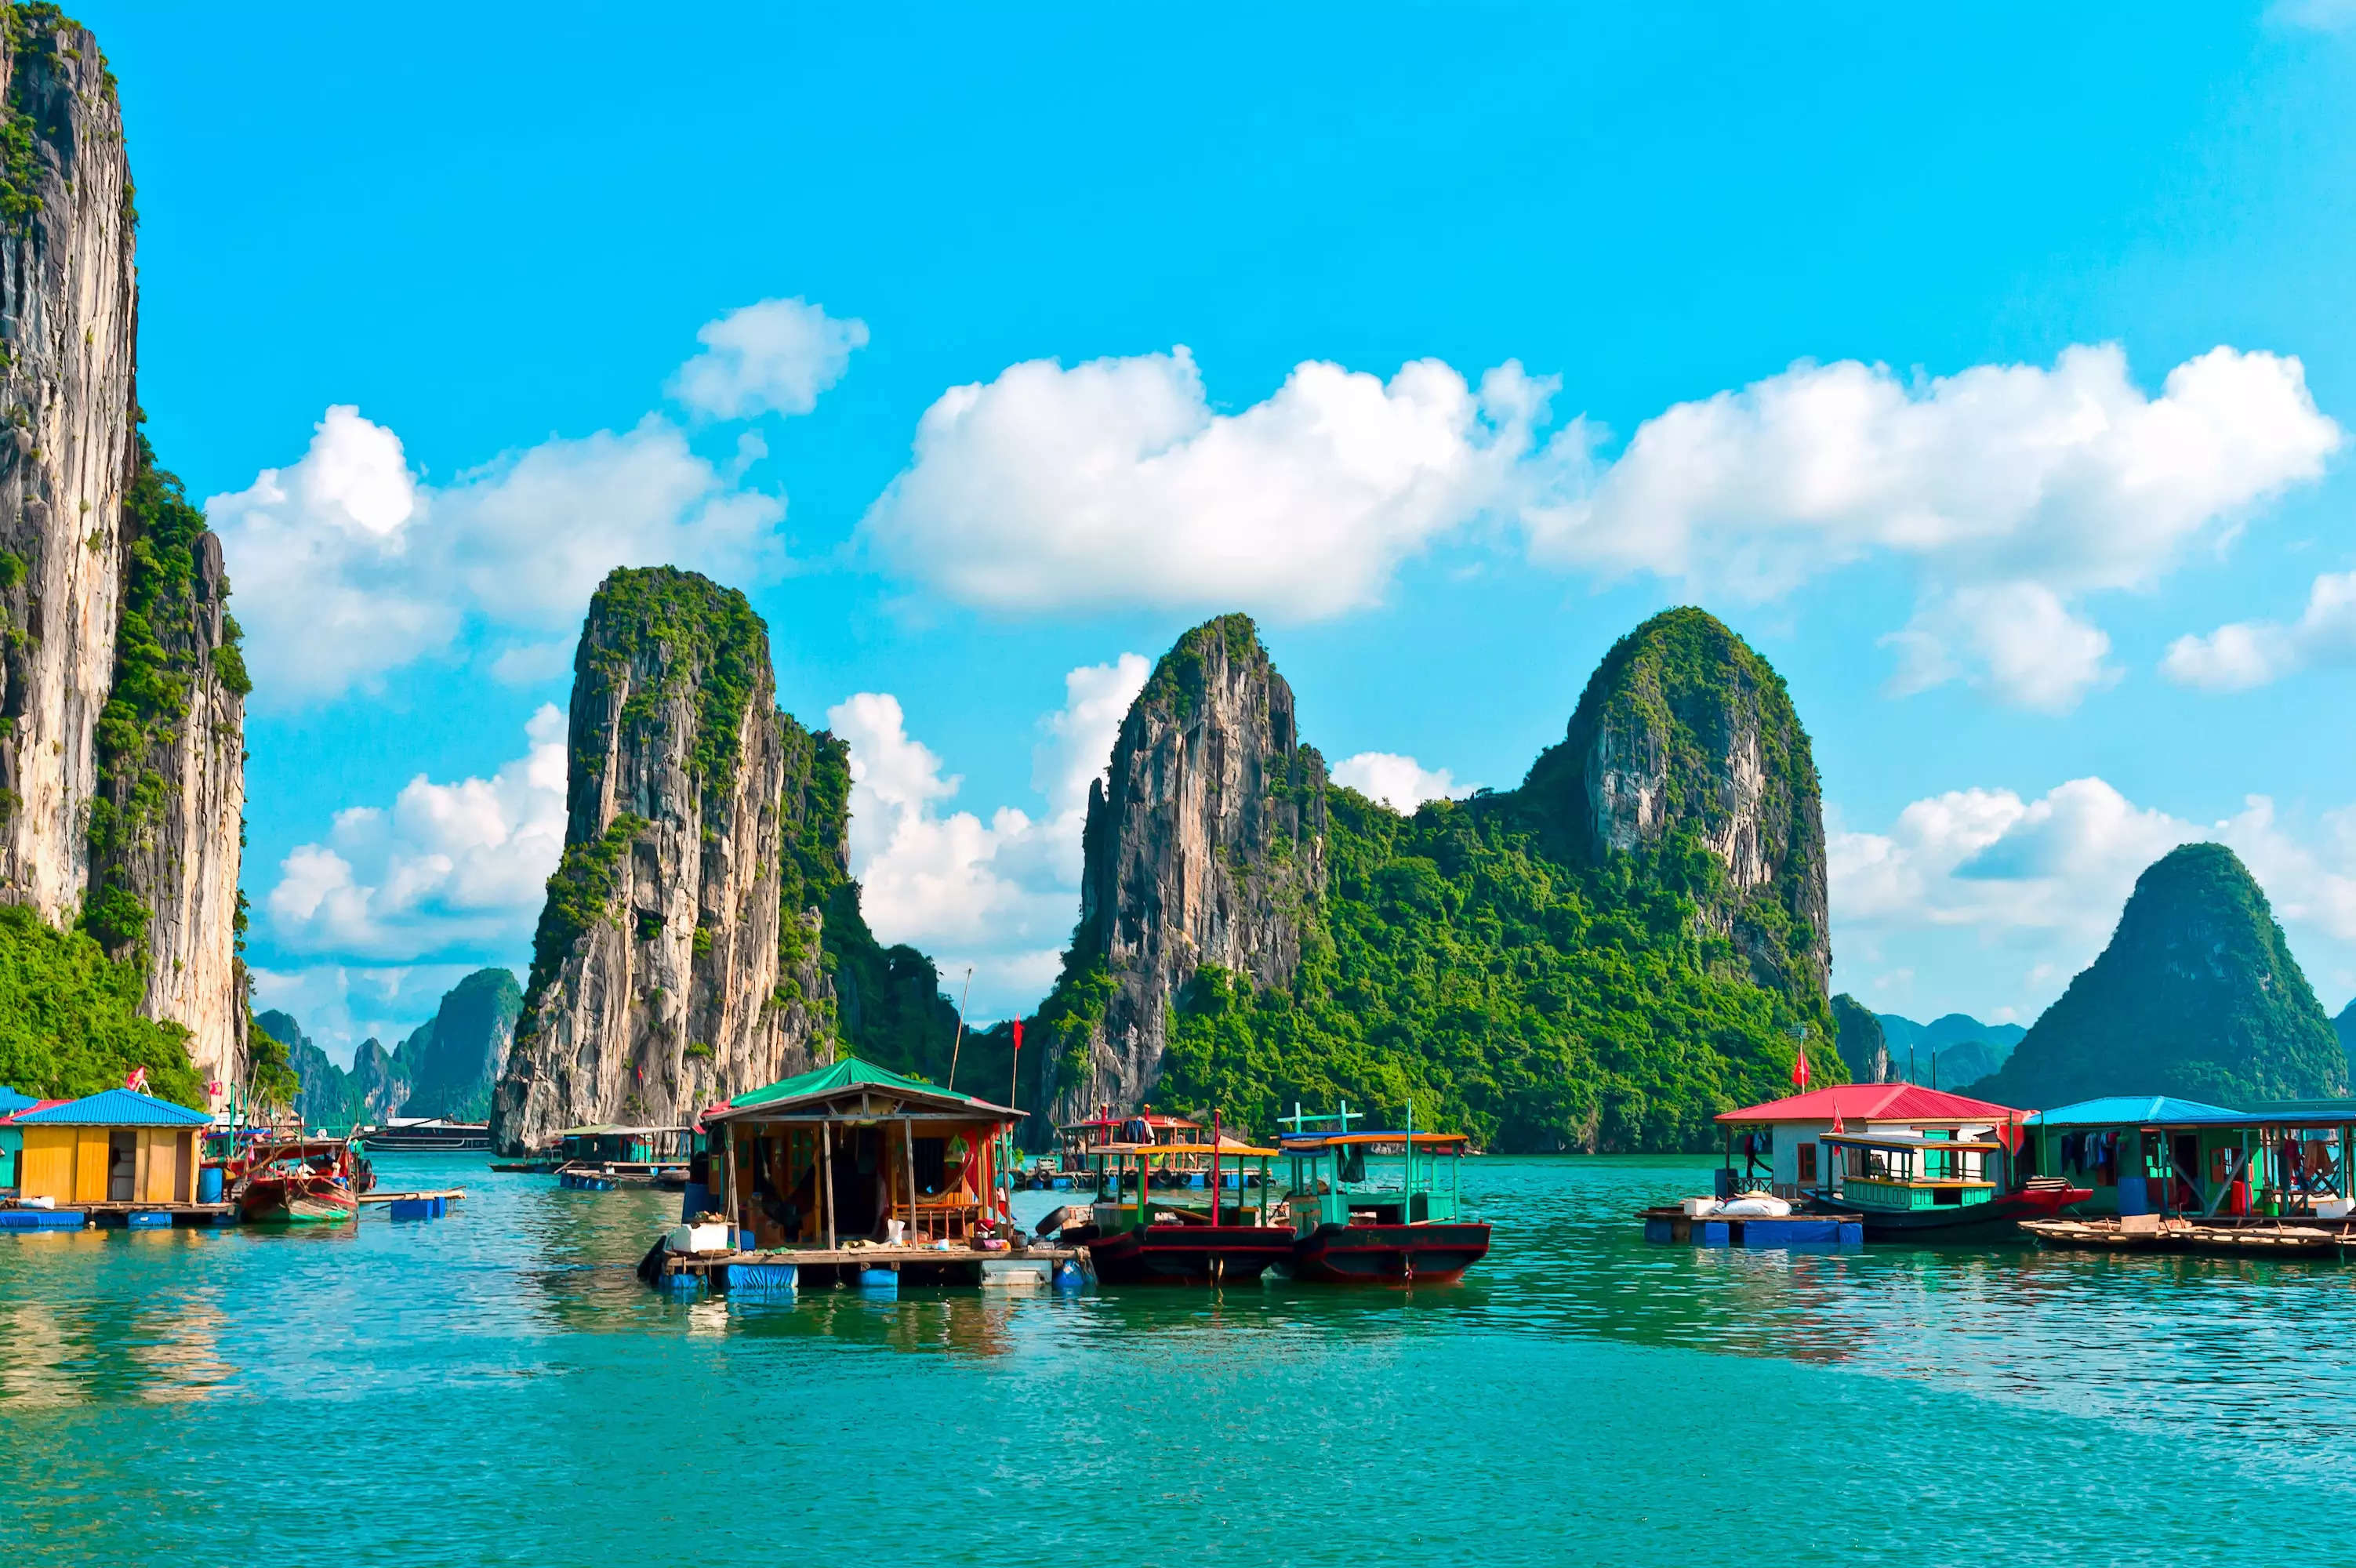 vietnam tourism promotion